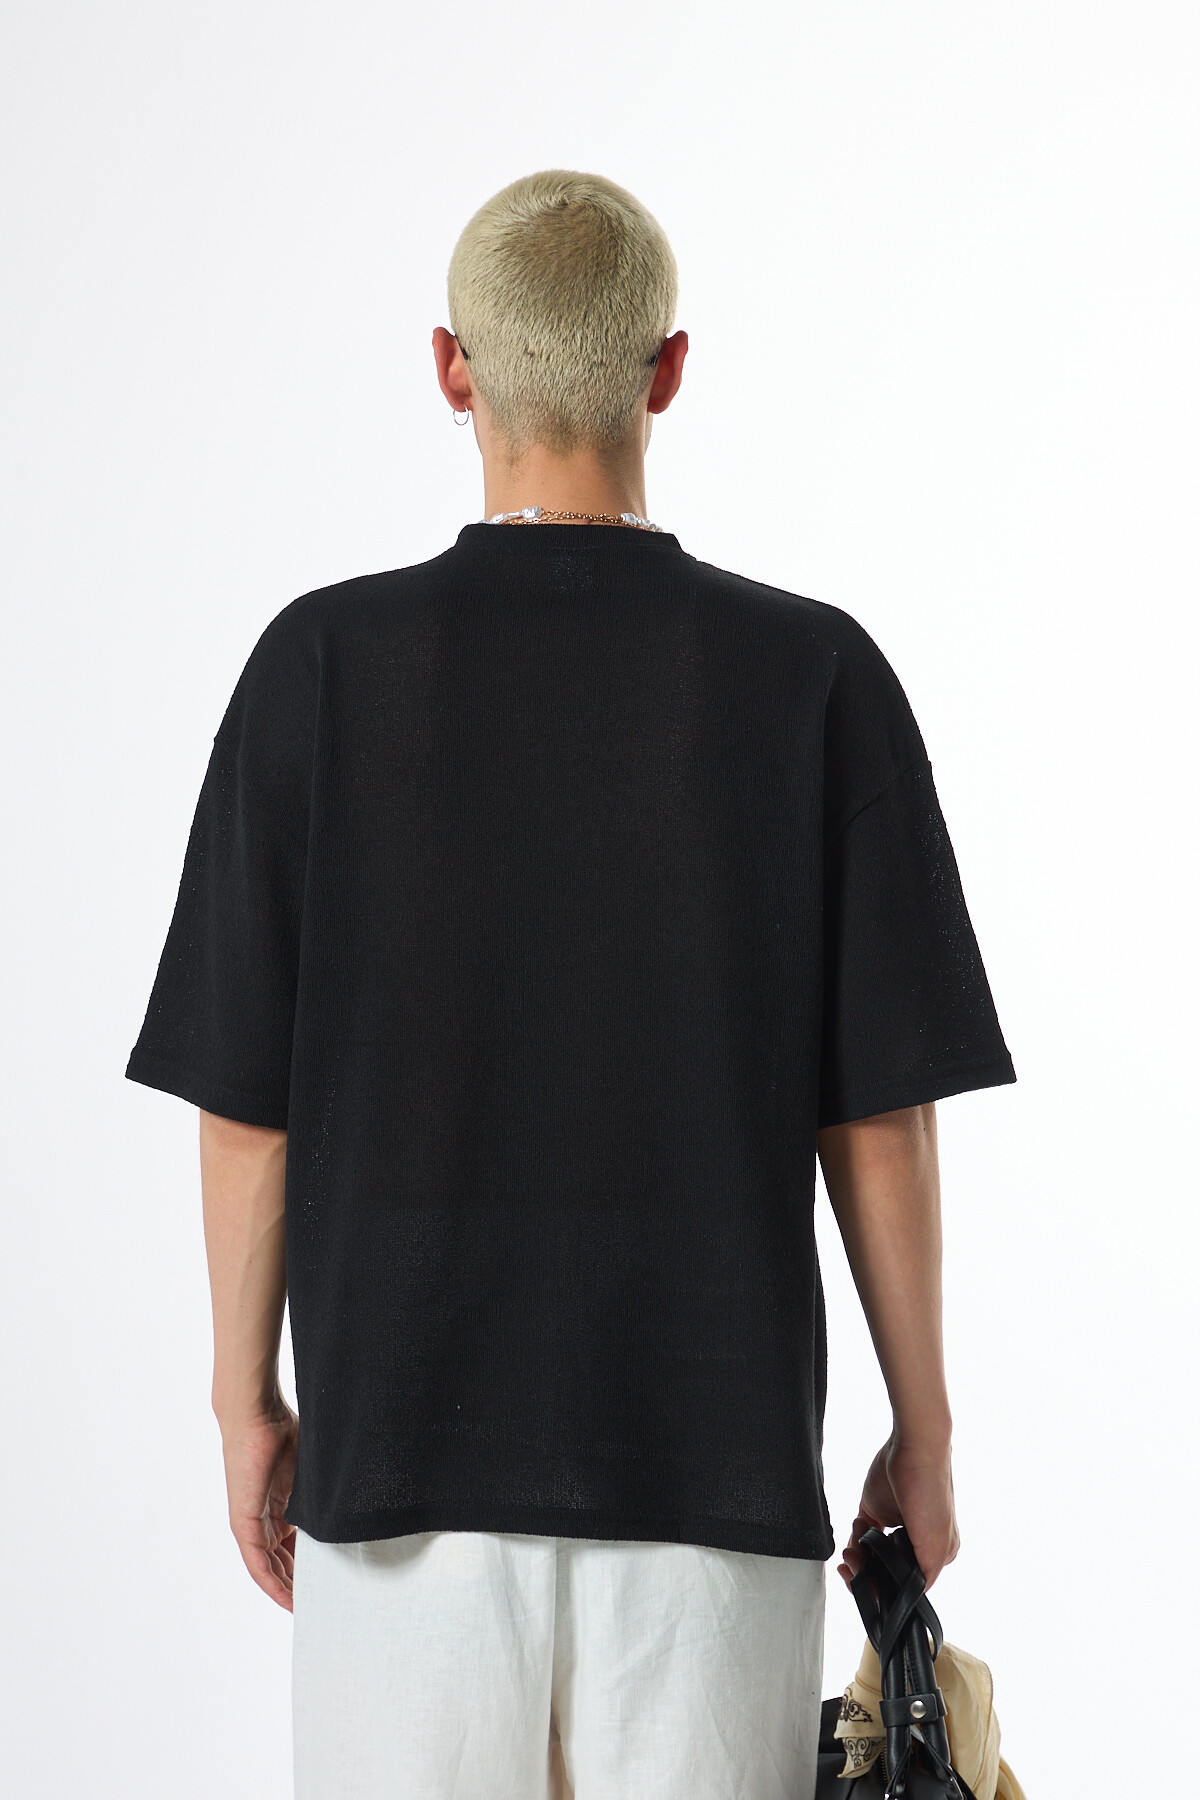 Ön Düğme Detaylı Oversız Triko T-Shirt Siyah